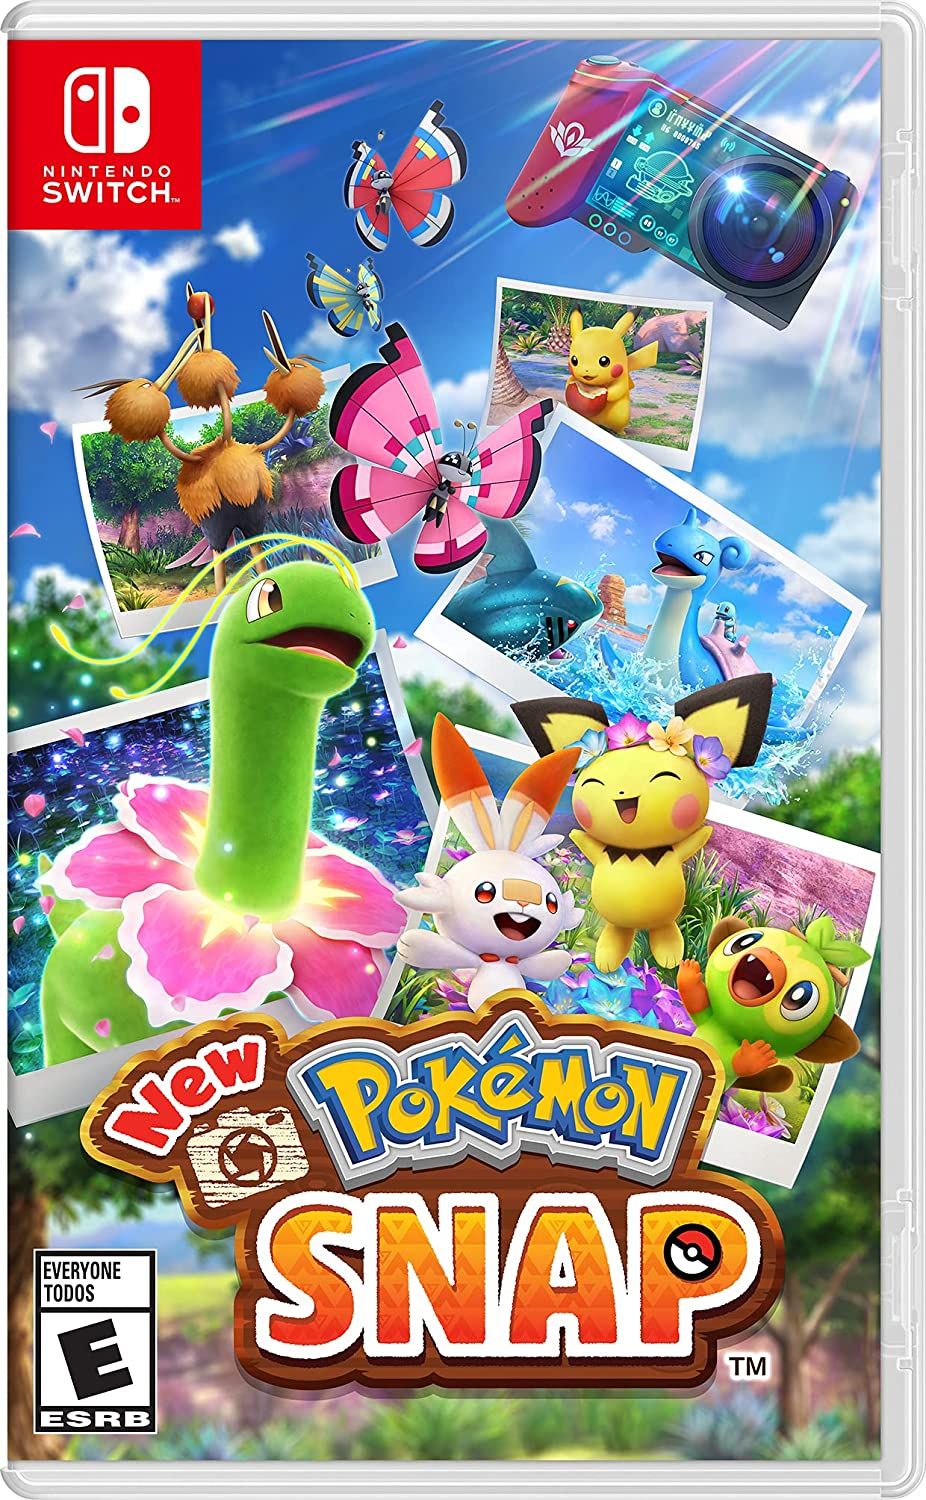 New Pokémon Snap Video Game